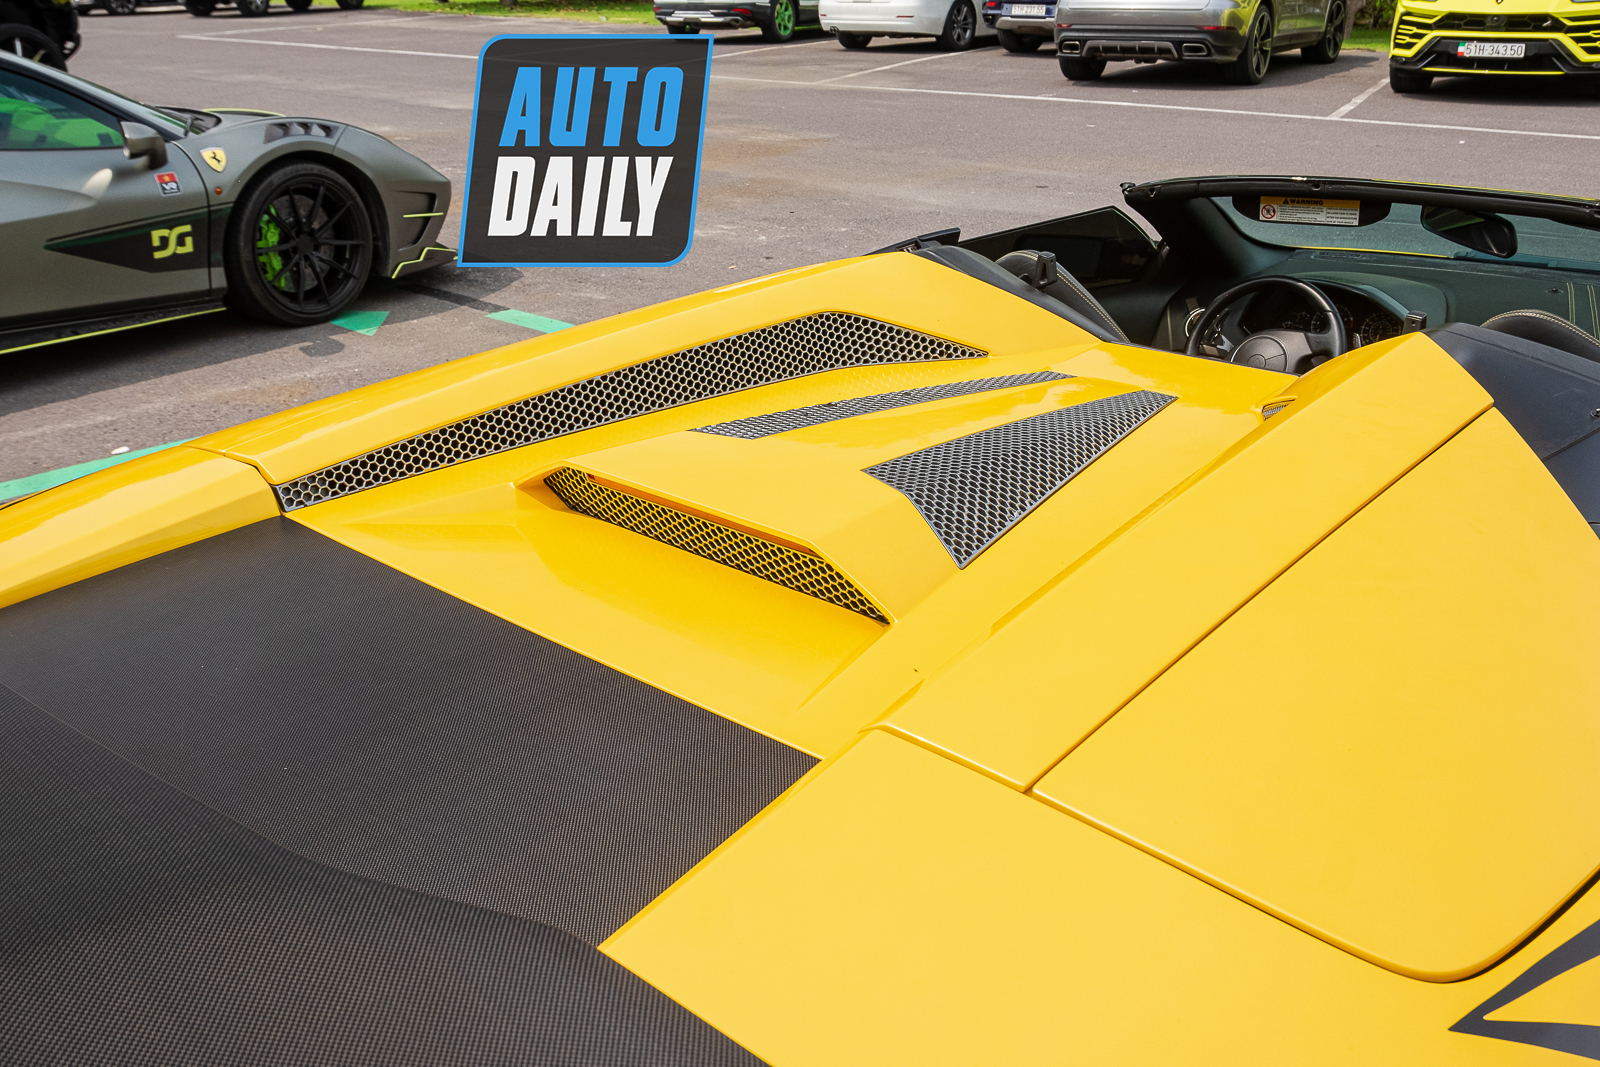 Chi tiết Lamborghini Murcielago Roadster 14 năm tuổi của doanh nhân Gia Lai lamborghini-murcielago-roadster-autodaily-8.JPG